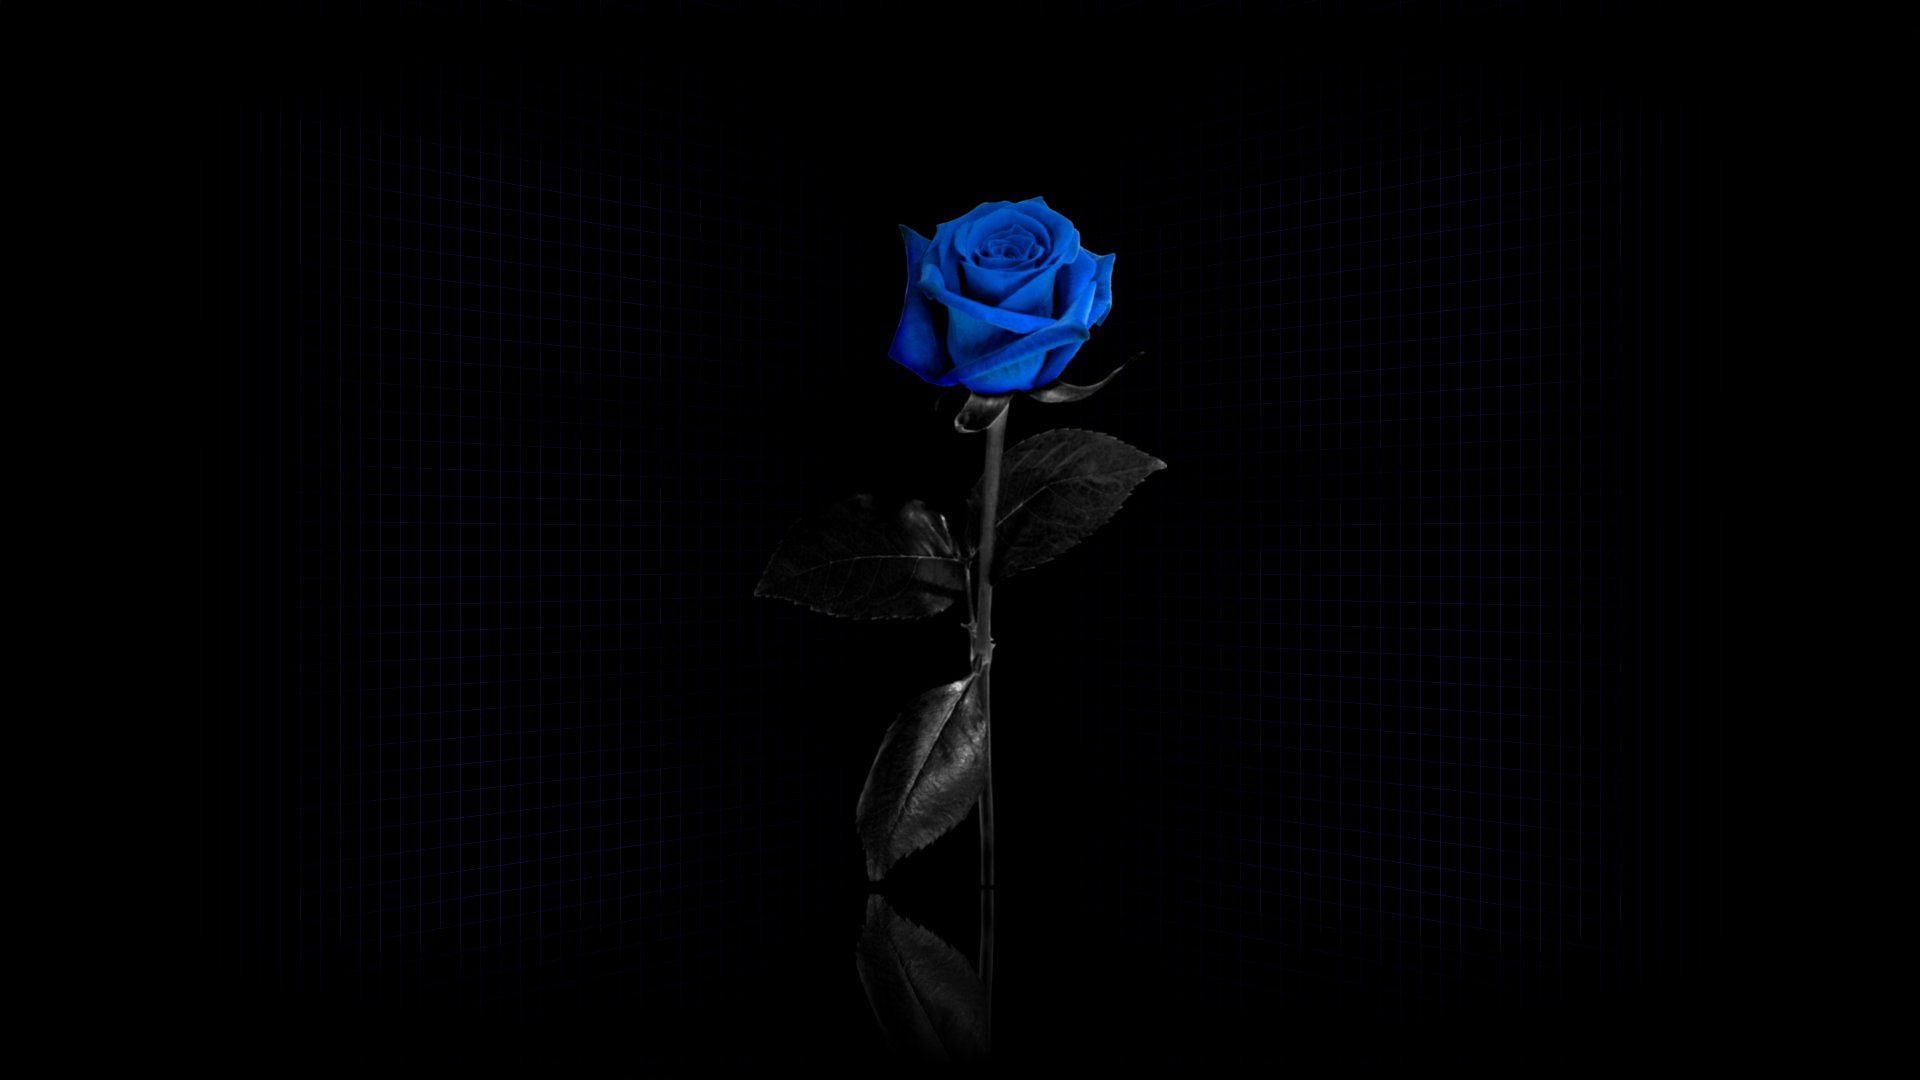 rose, rose flower, dark, grid, blue, reflection, flower iphone wallpaper